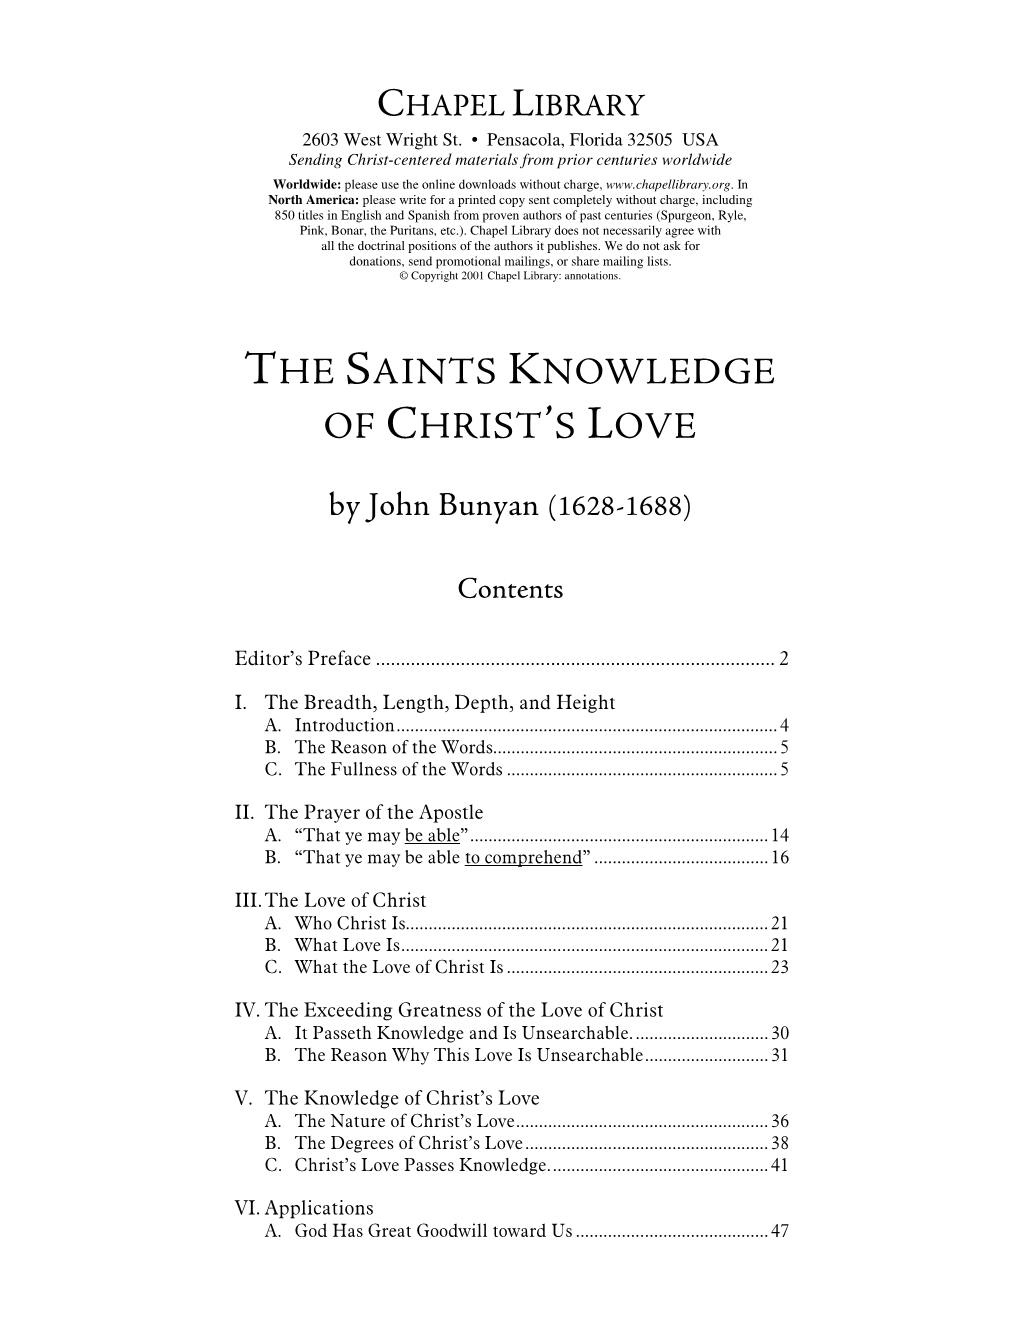 Saint's Knowledge of Christ's Love